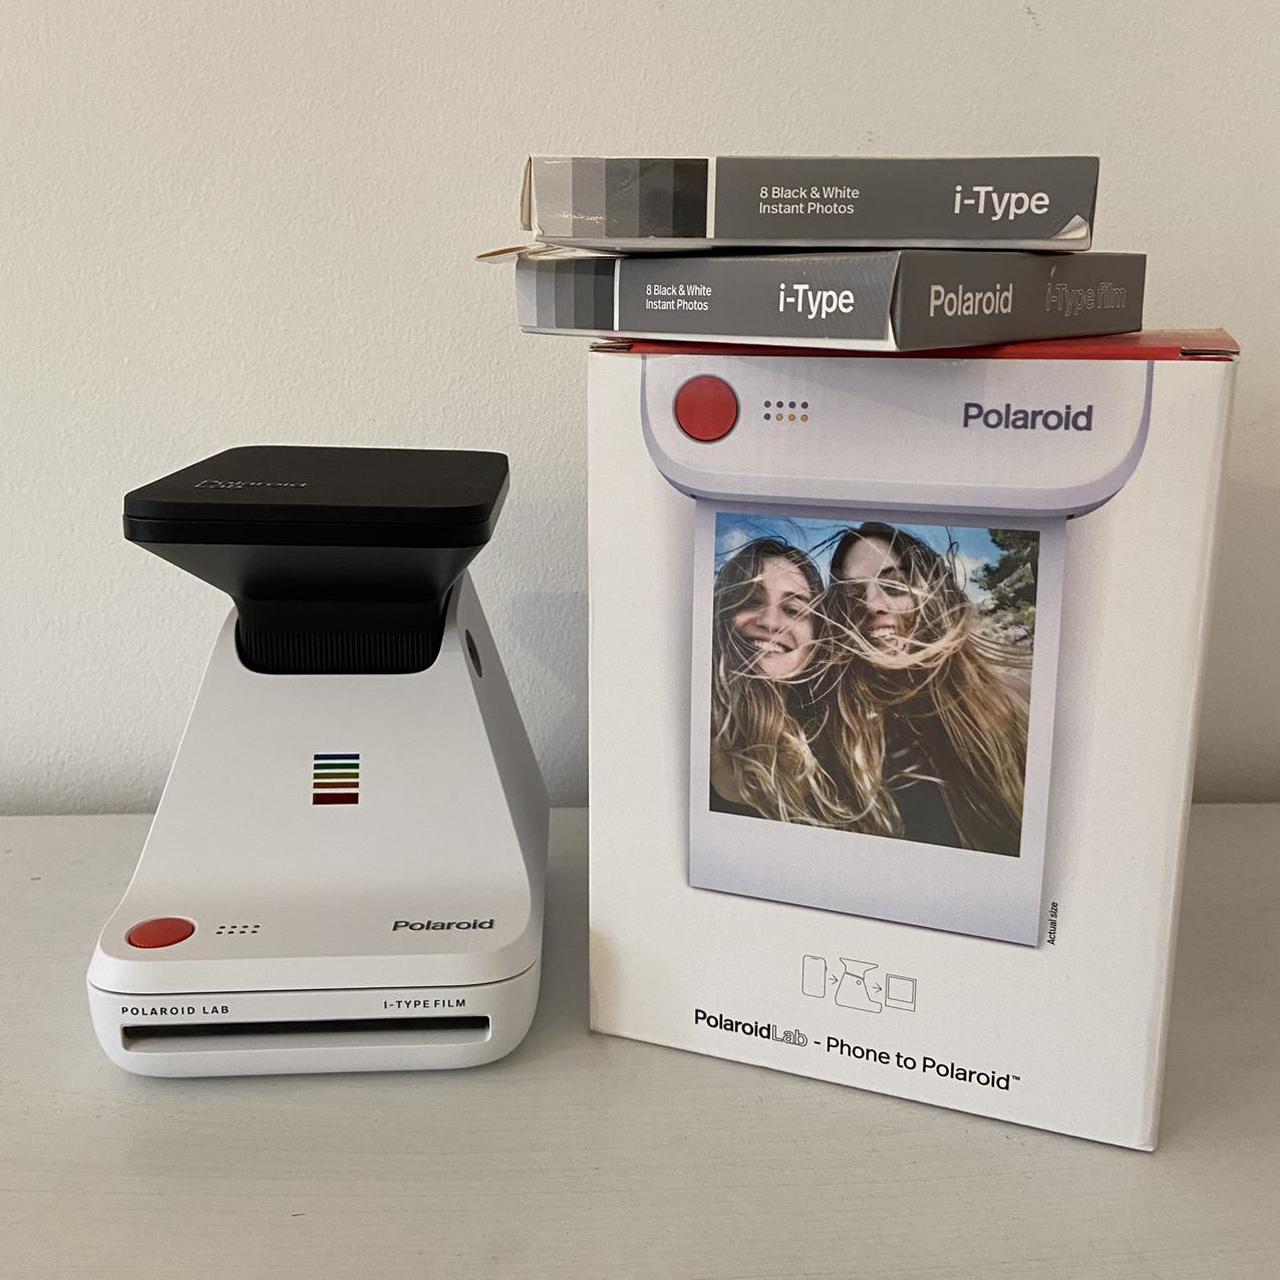 Product Image 1 - PRIVATE LISTING @ellieross02 

Polaroid Lab